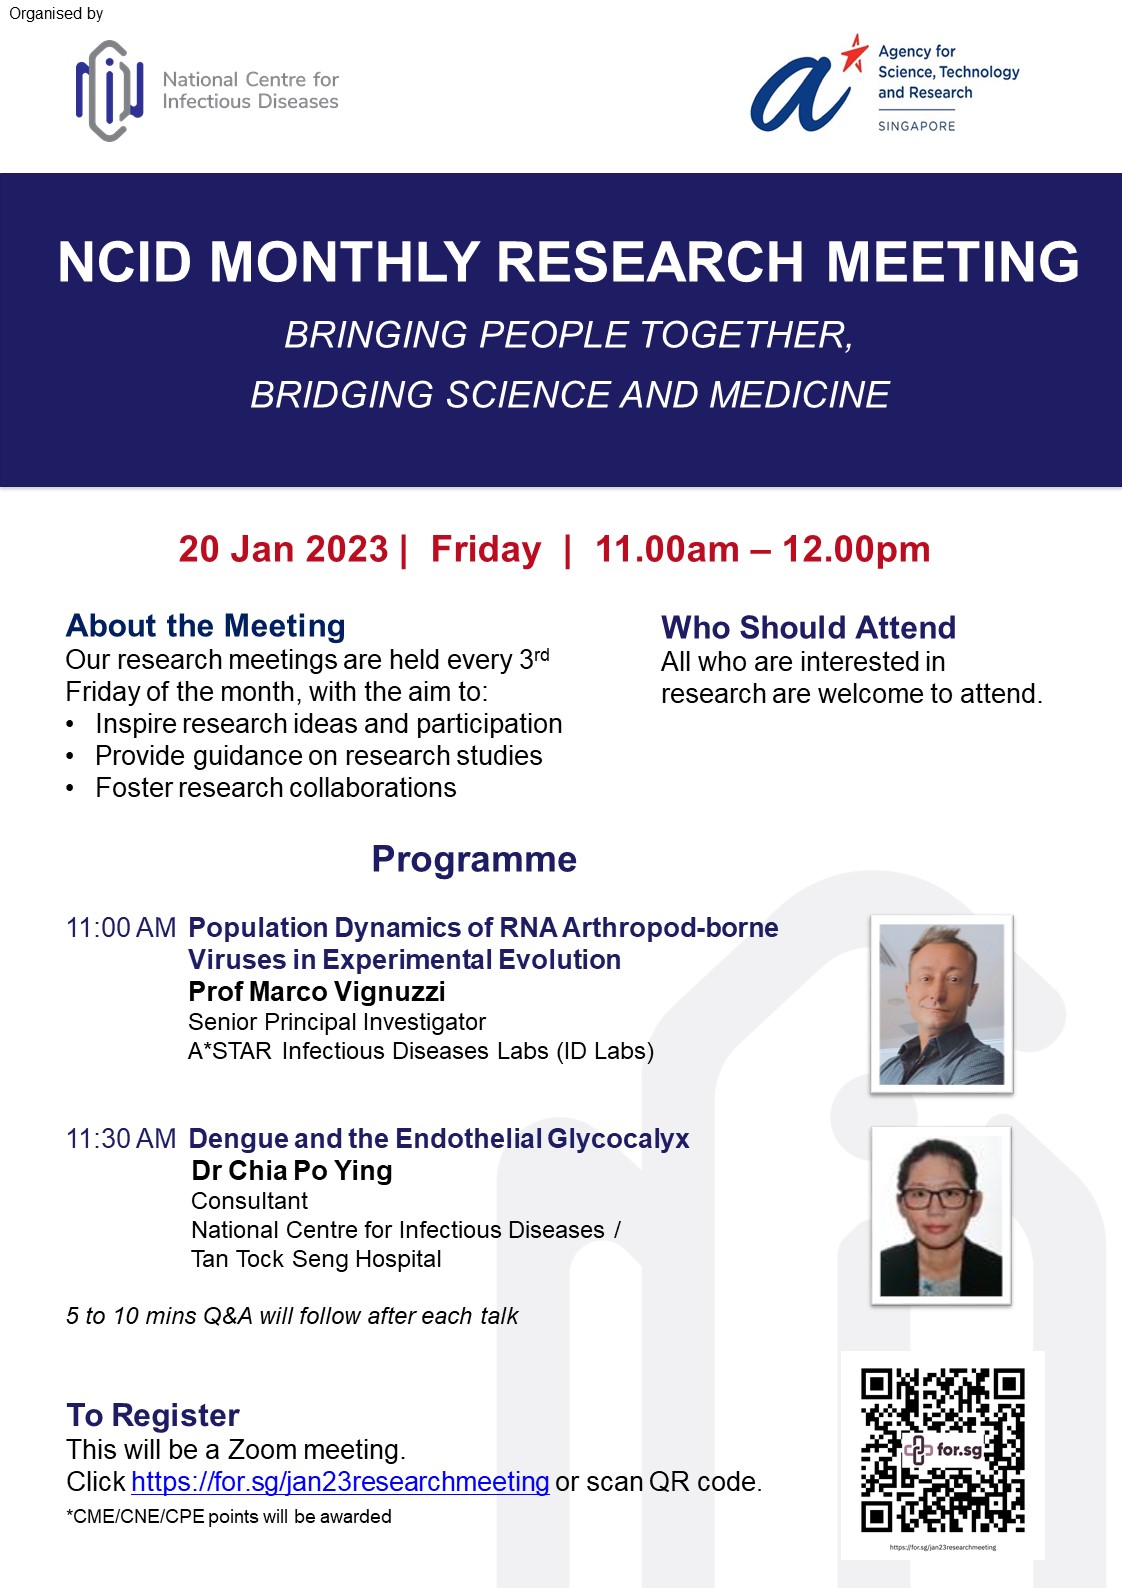 Jan 23 NCID Research Meeting Publicity Poster (Part 1).JPG